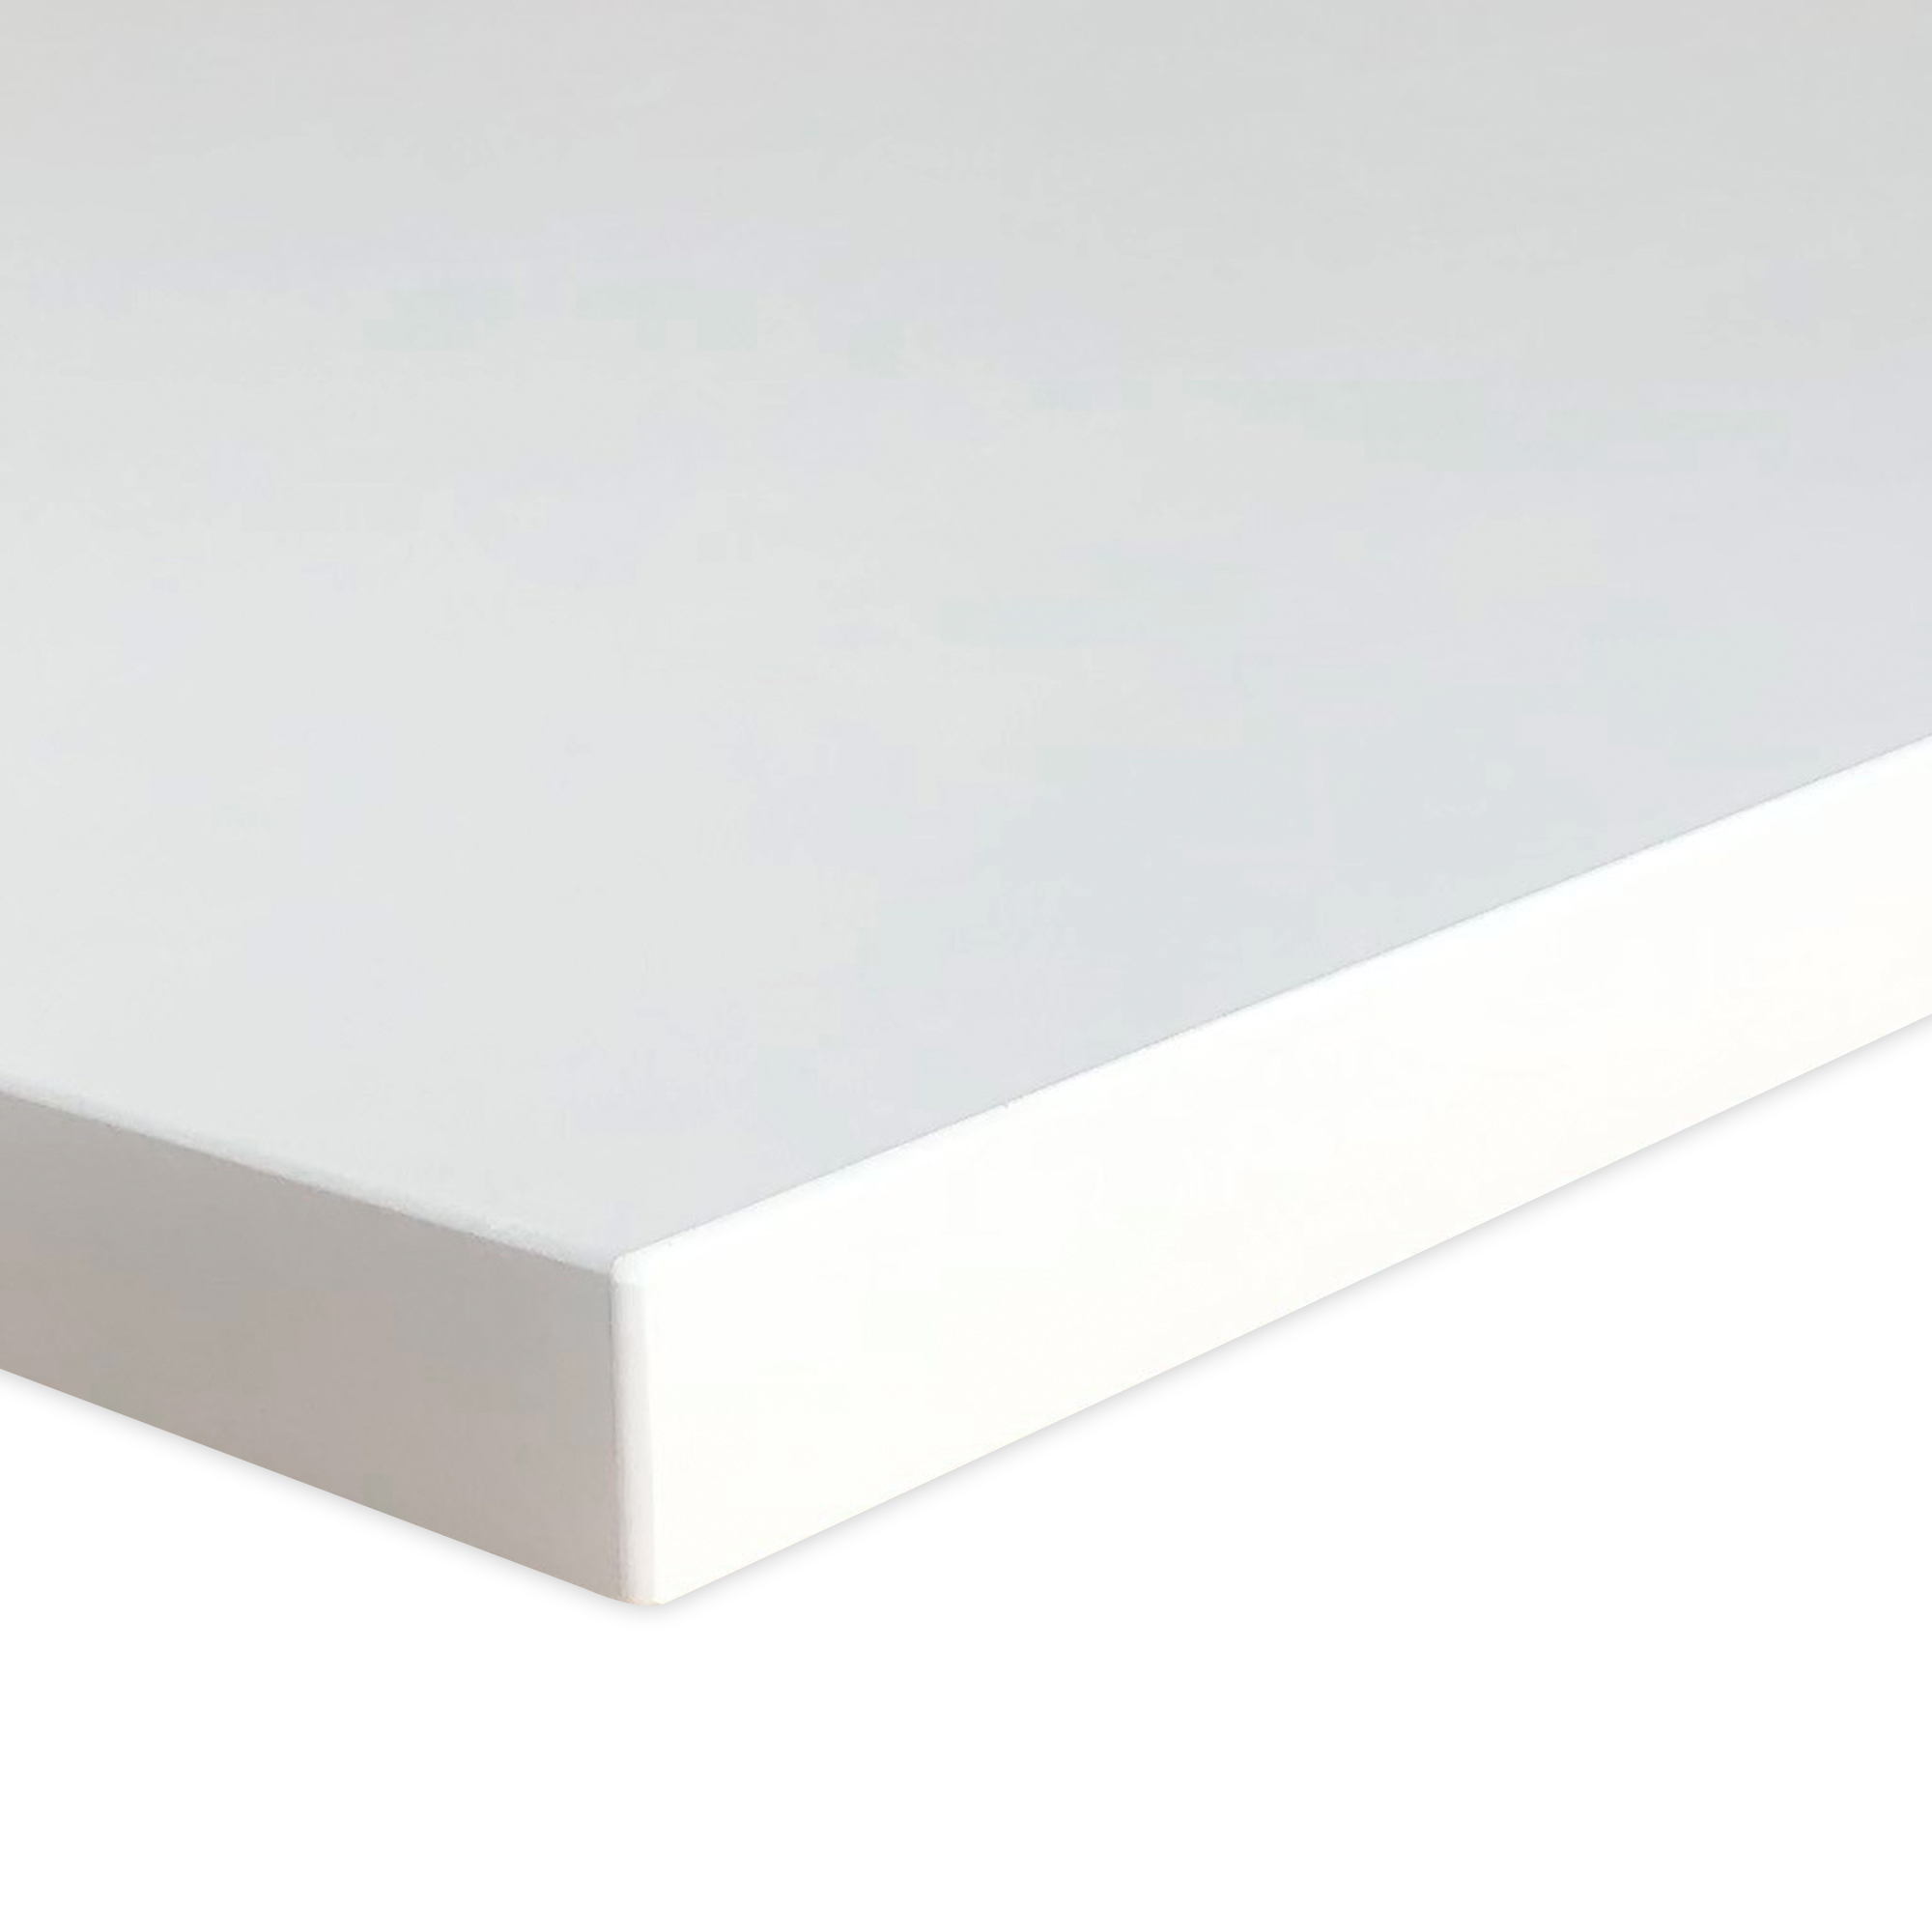 Tabletop | 180x80 cm | White